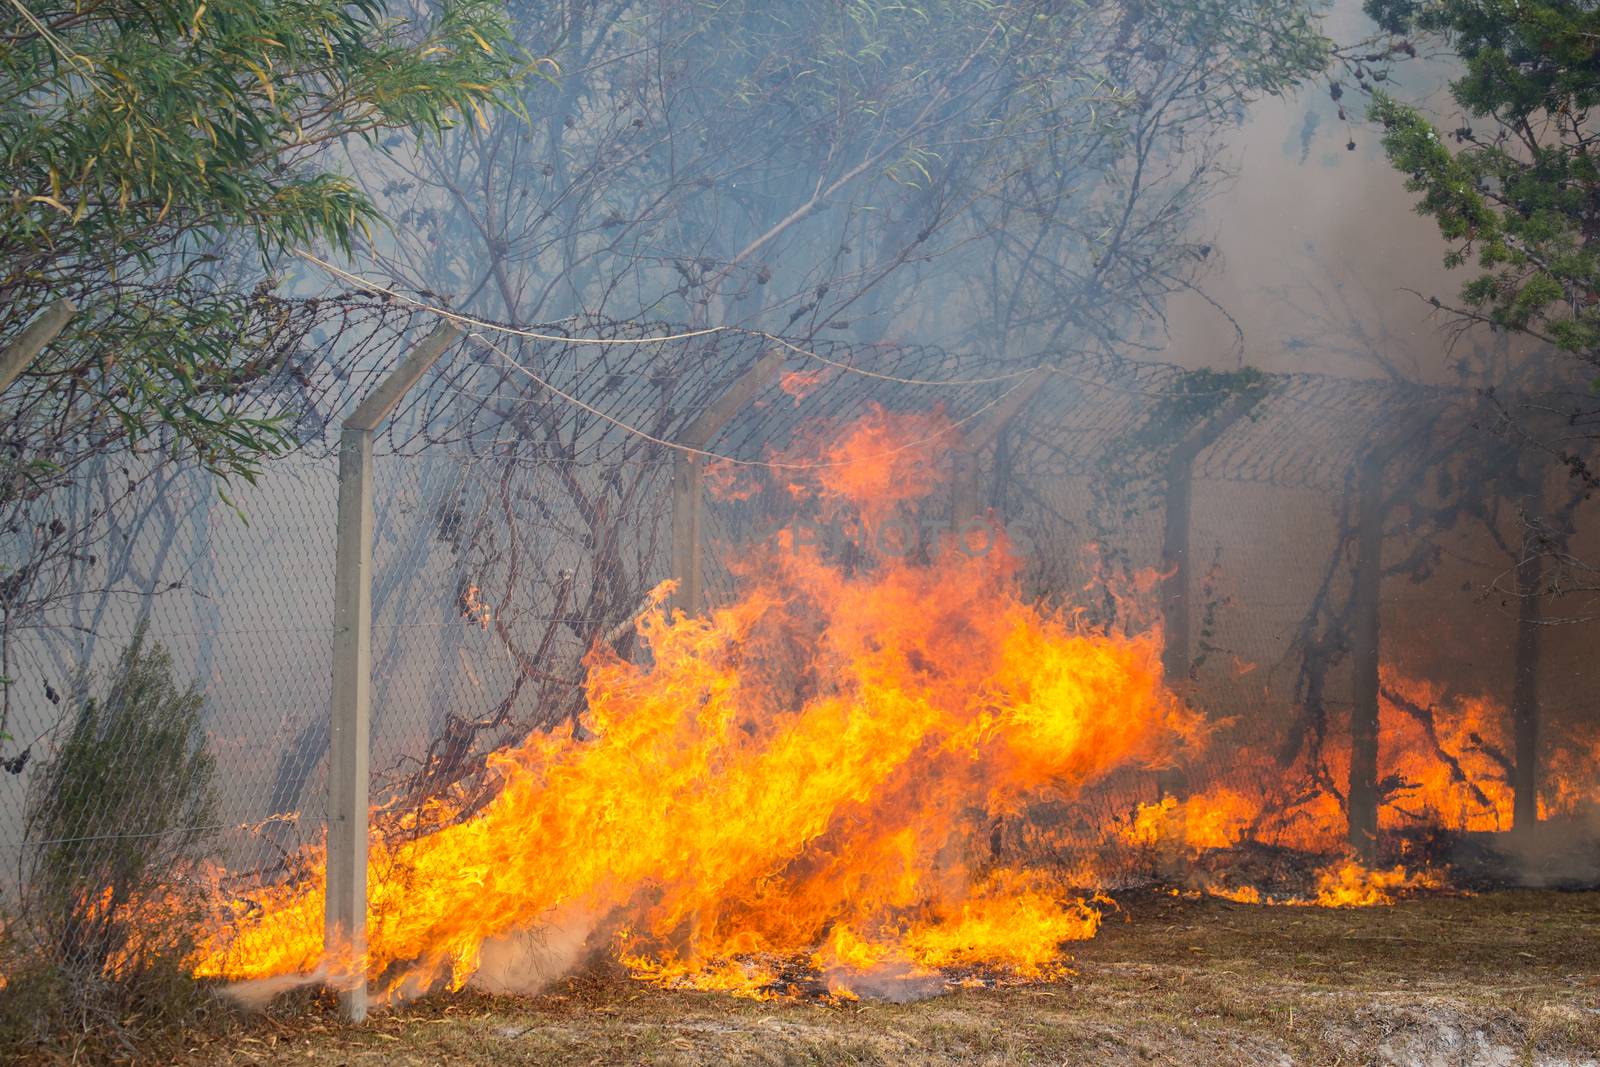 Wild bush fire with large orange flames